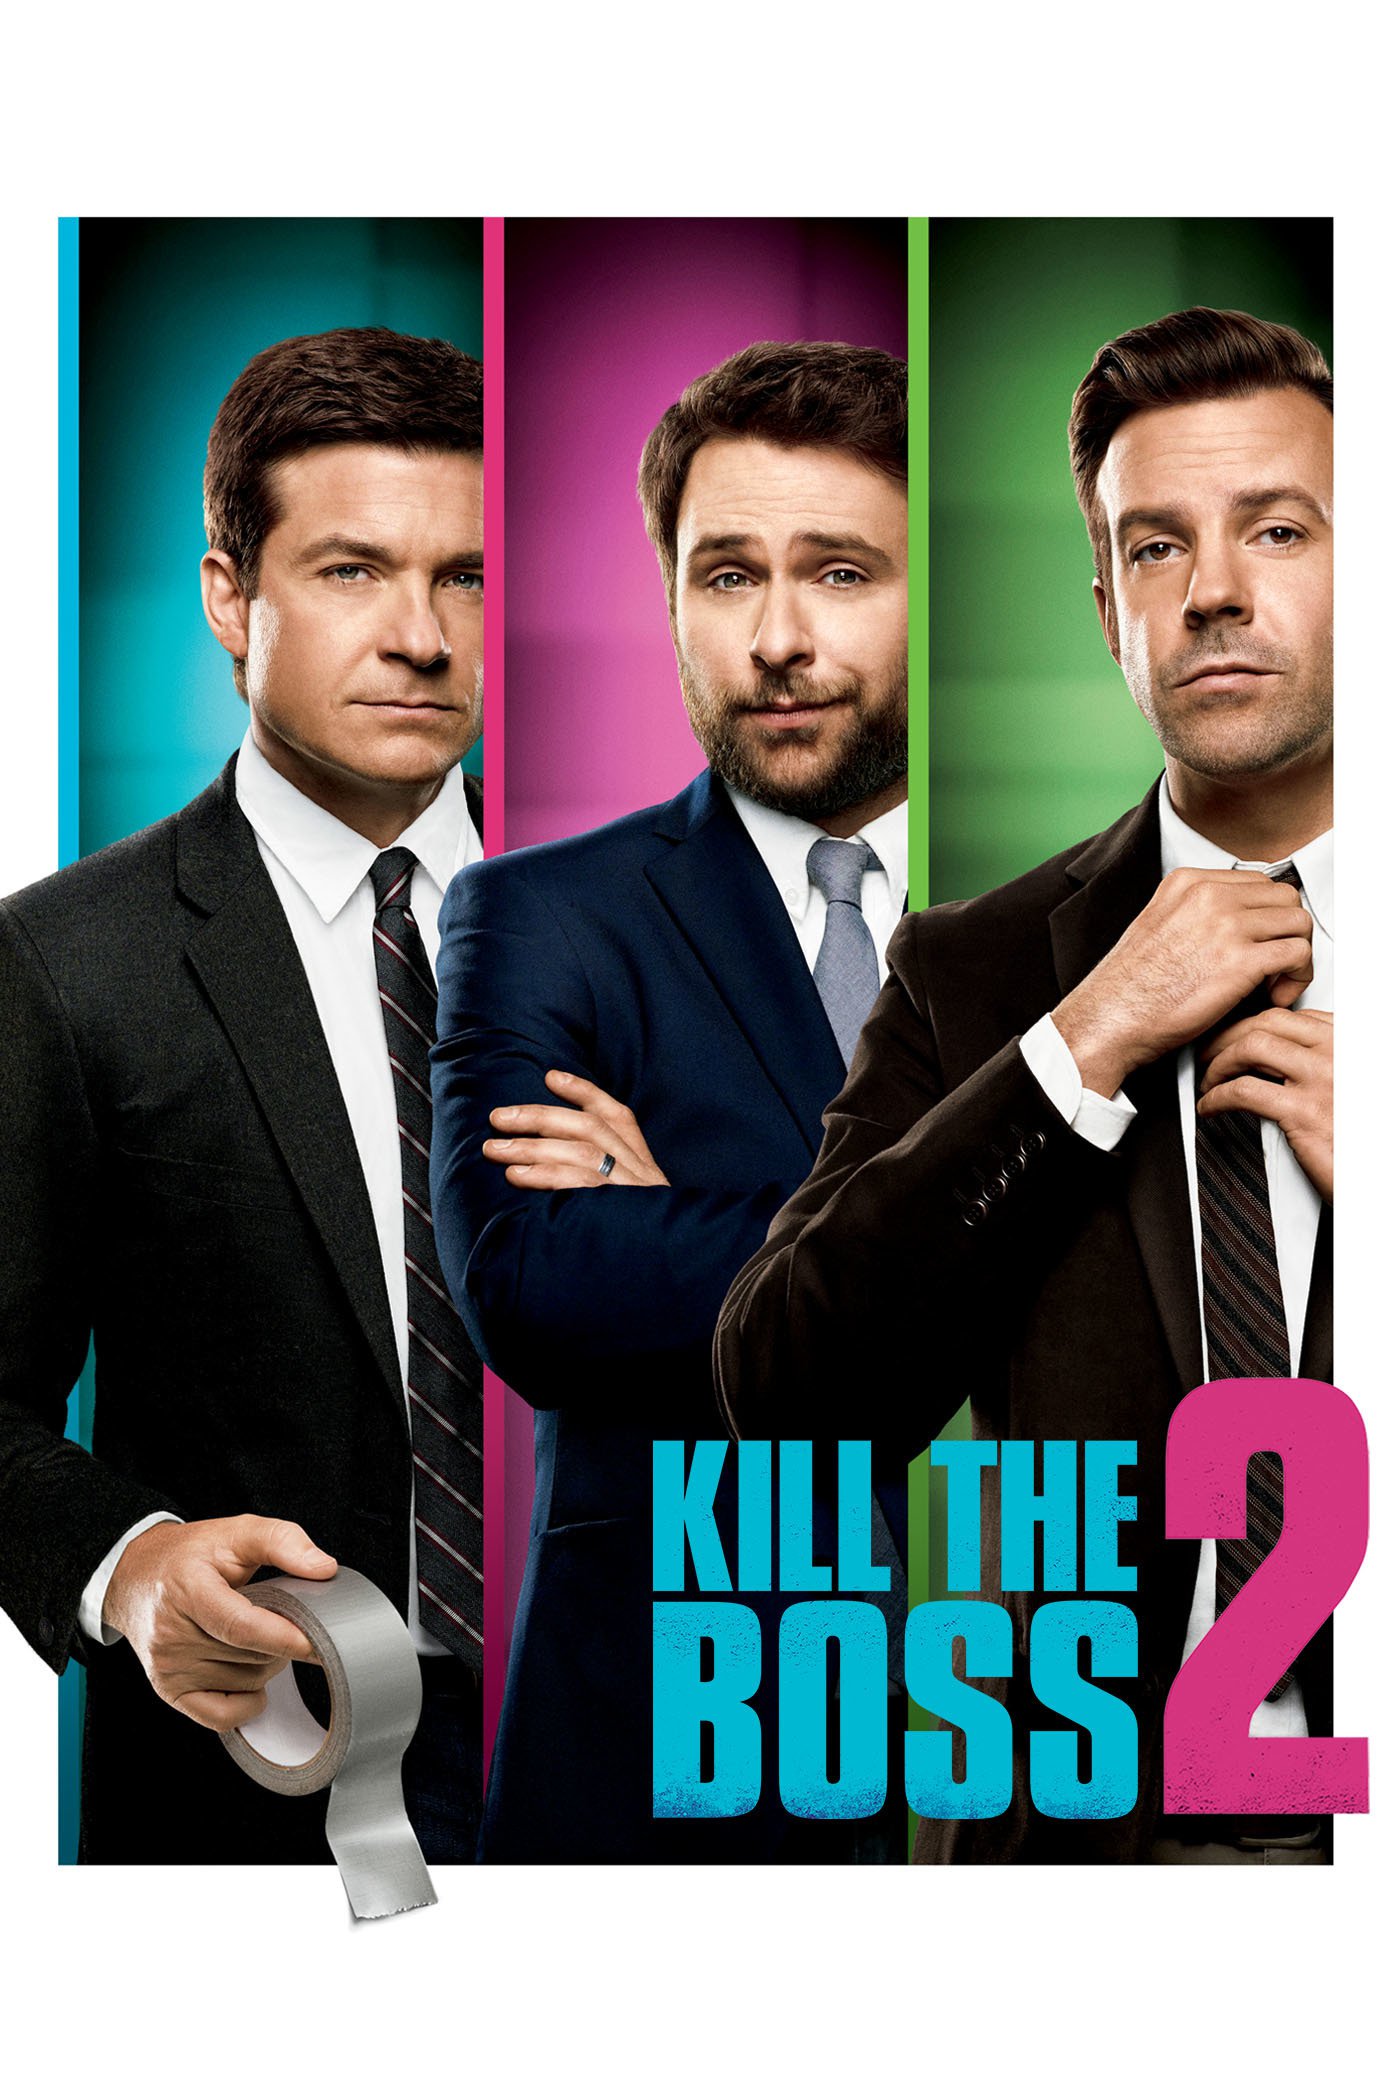 Plakat von "Kill the Boss 2"